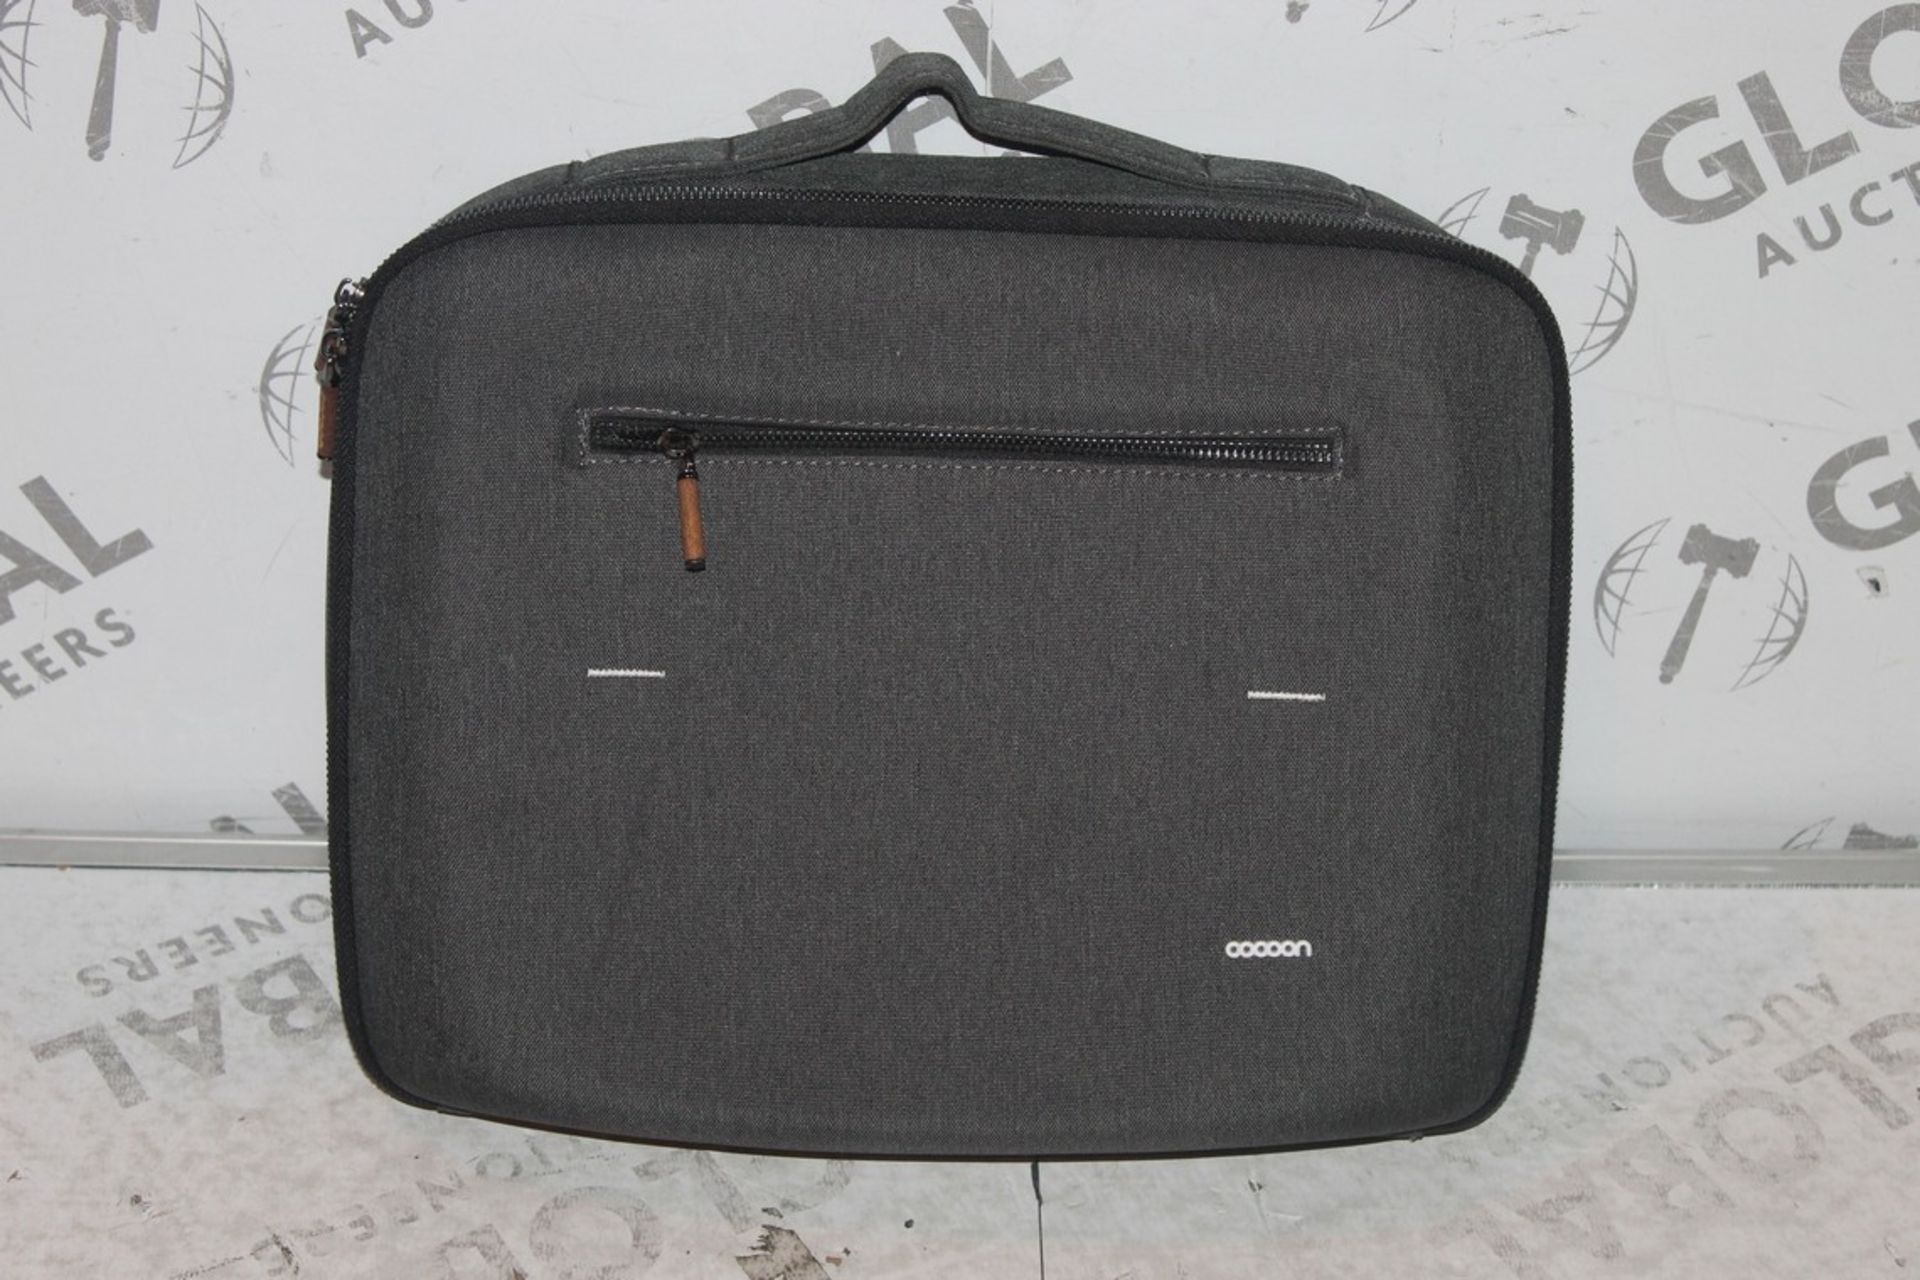 Cocoon Designer Laptop Bag Briefcase RRP £80